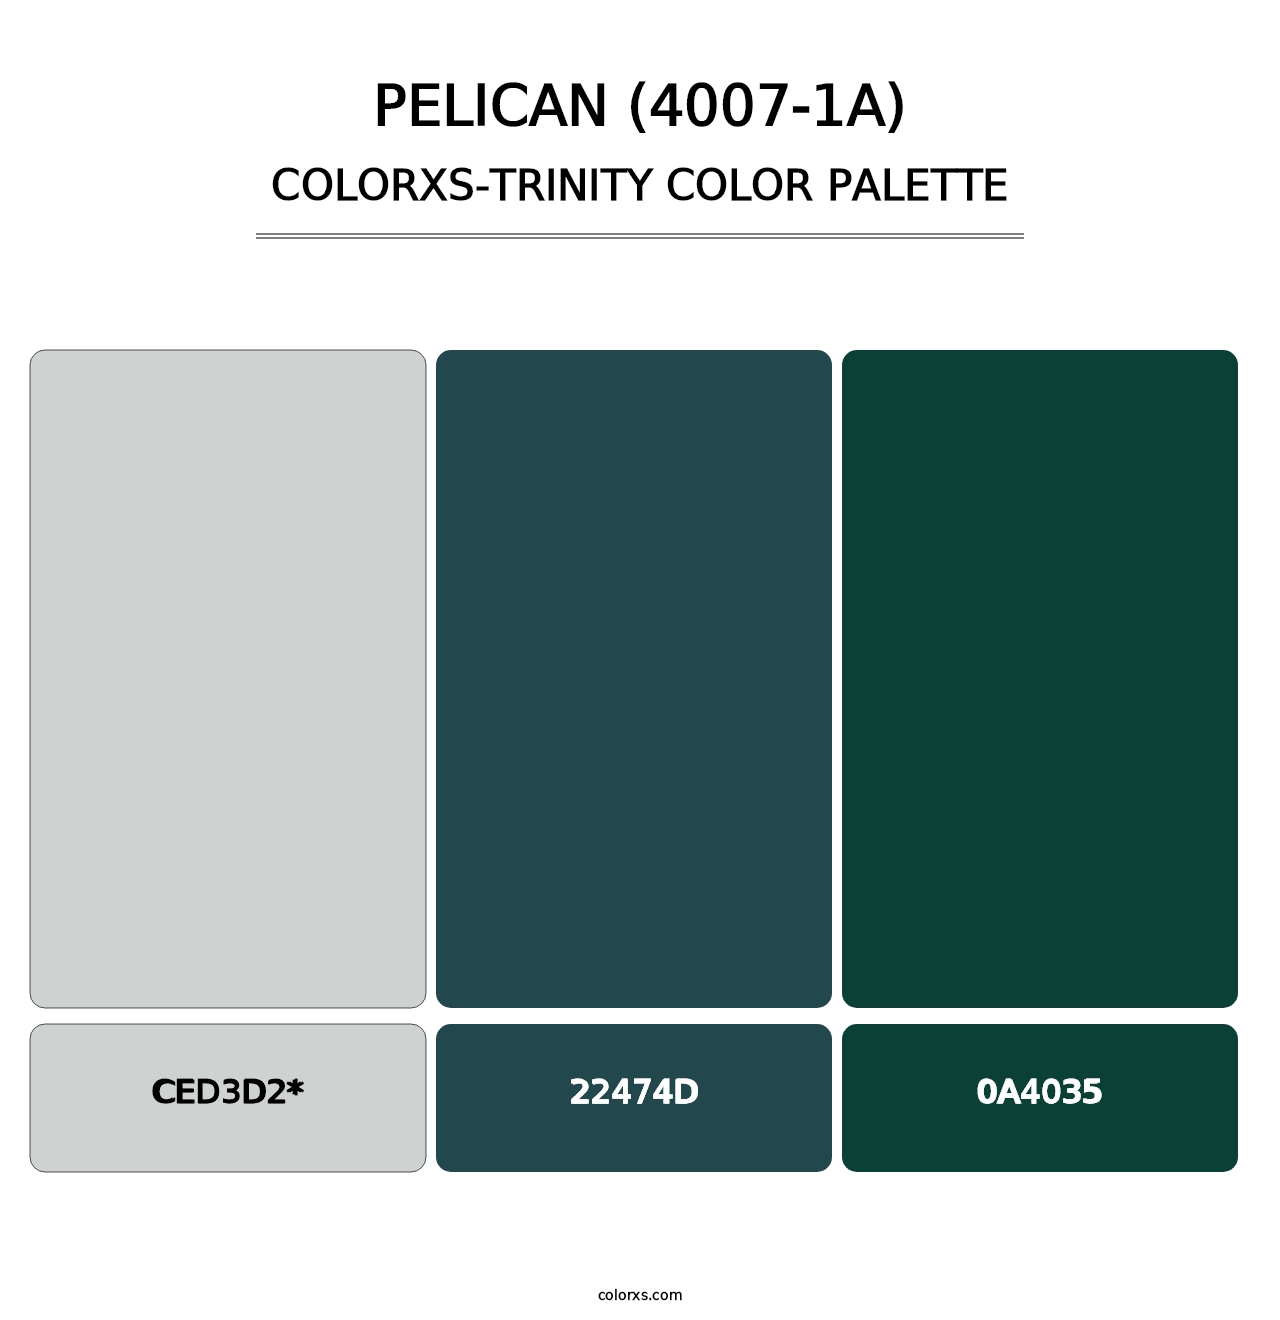 Pelican (4007-1A) - Colorxs Trinity Palette